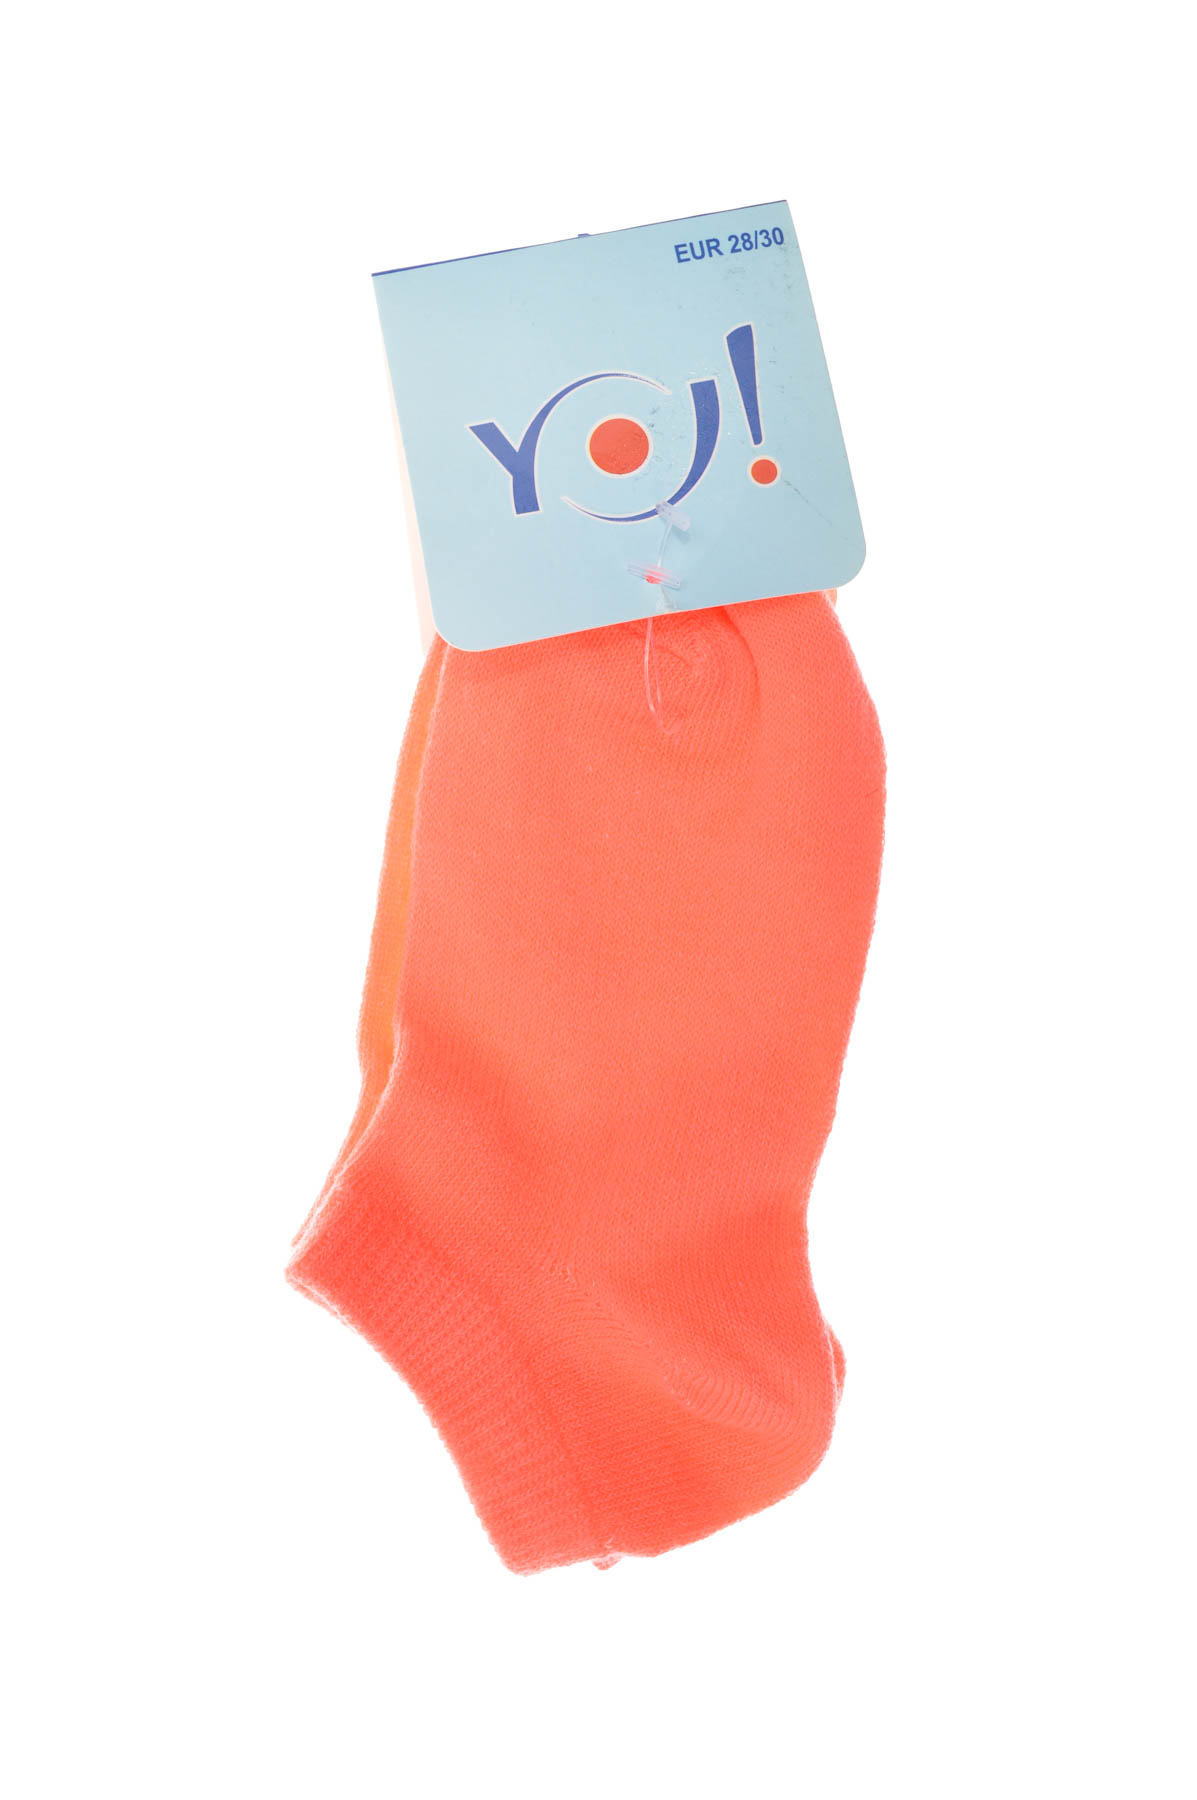 Kids' Socks - YO! club - 1